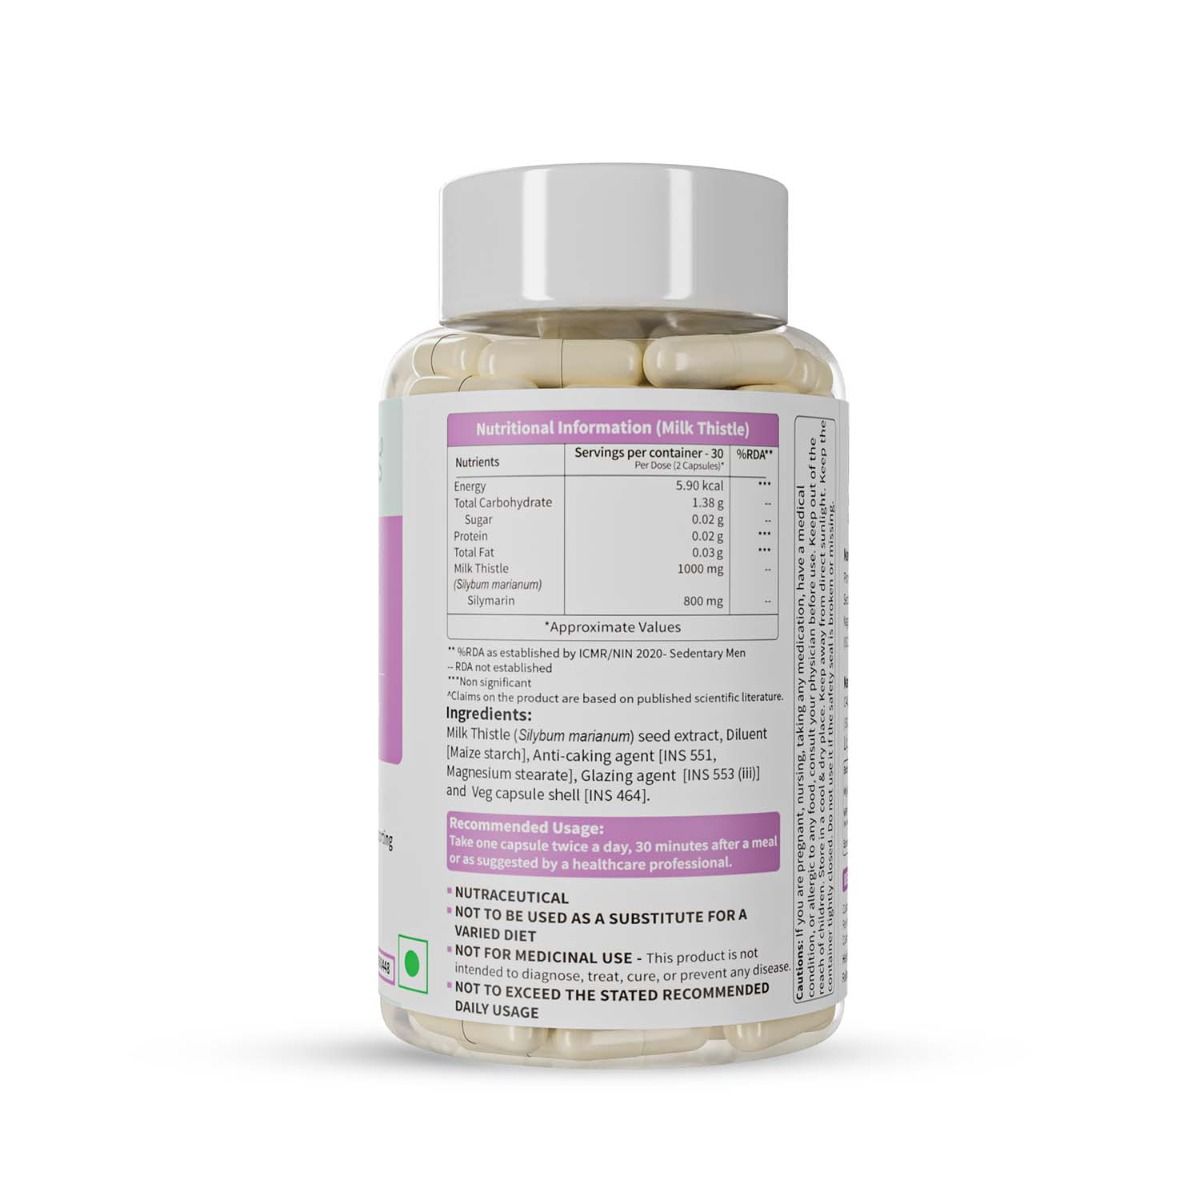 Neuherbs Milk Thistle 80% Silymarin Liver Detox 800 mg, 60 Capsules, Pack of 1 